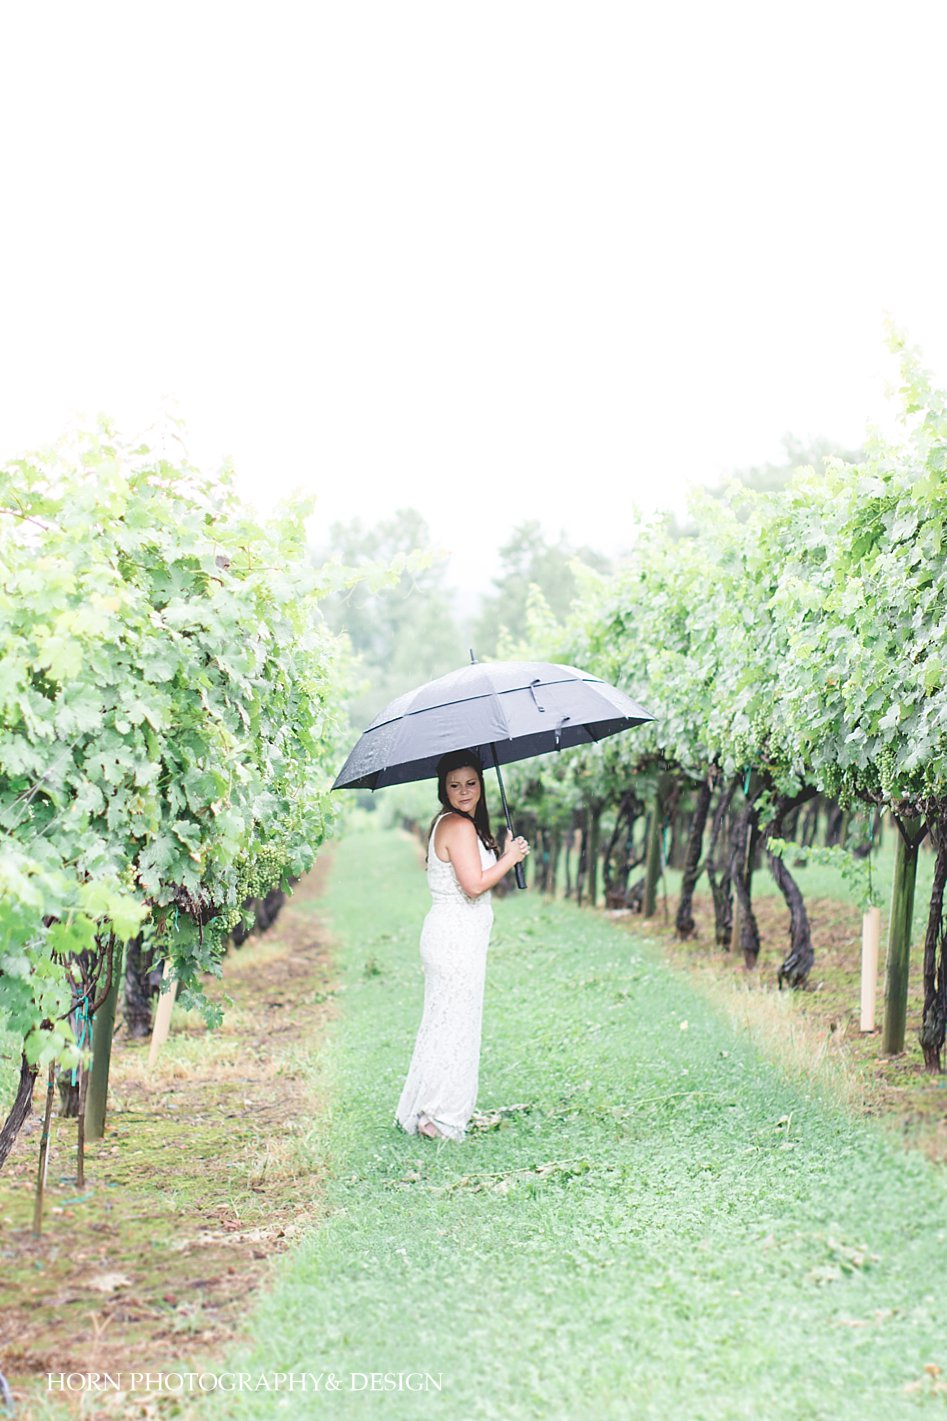 Bride in Vineyard during rain with umbrella